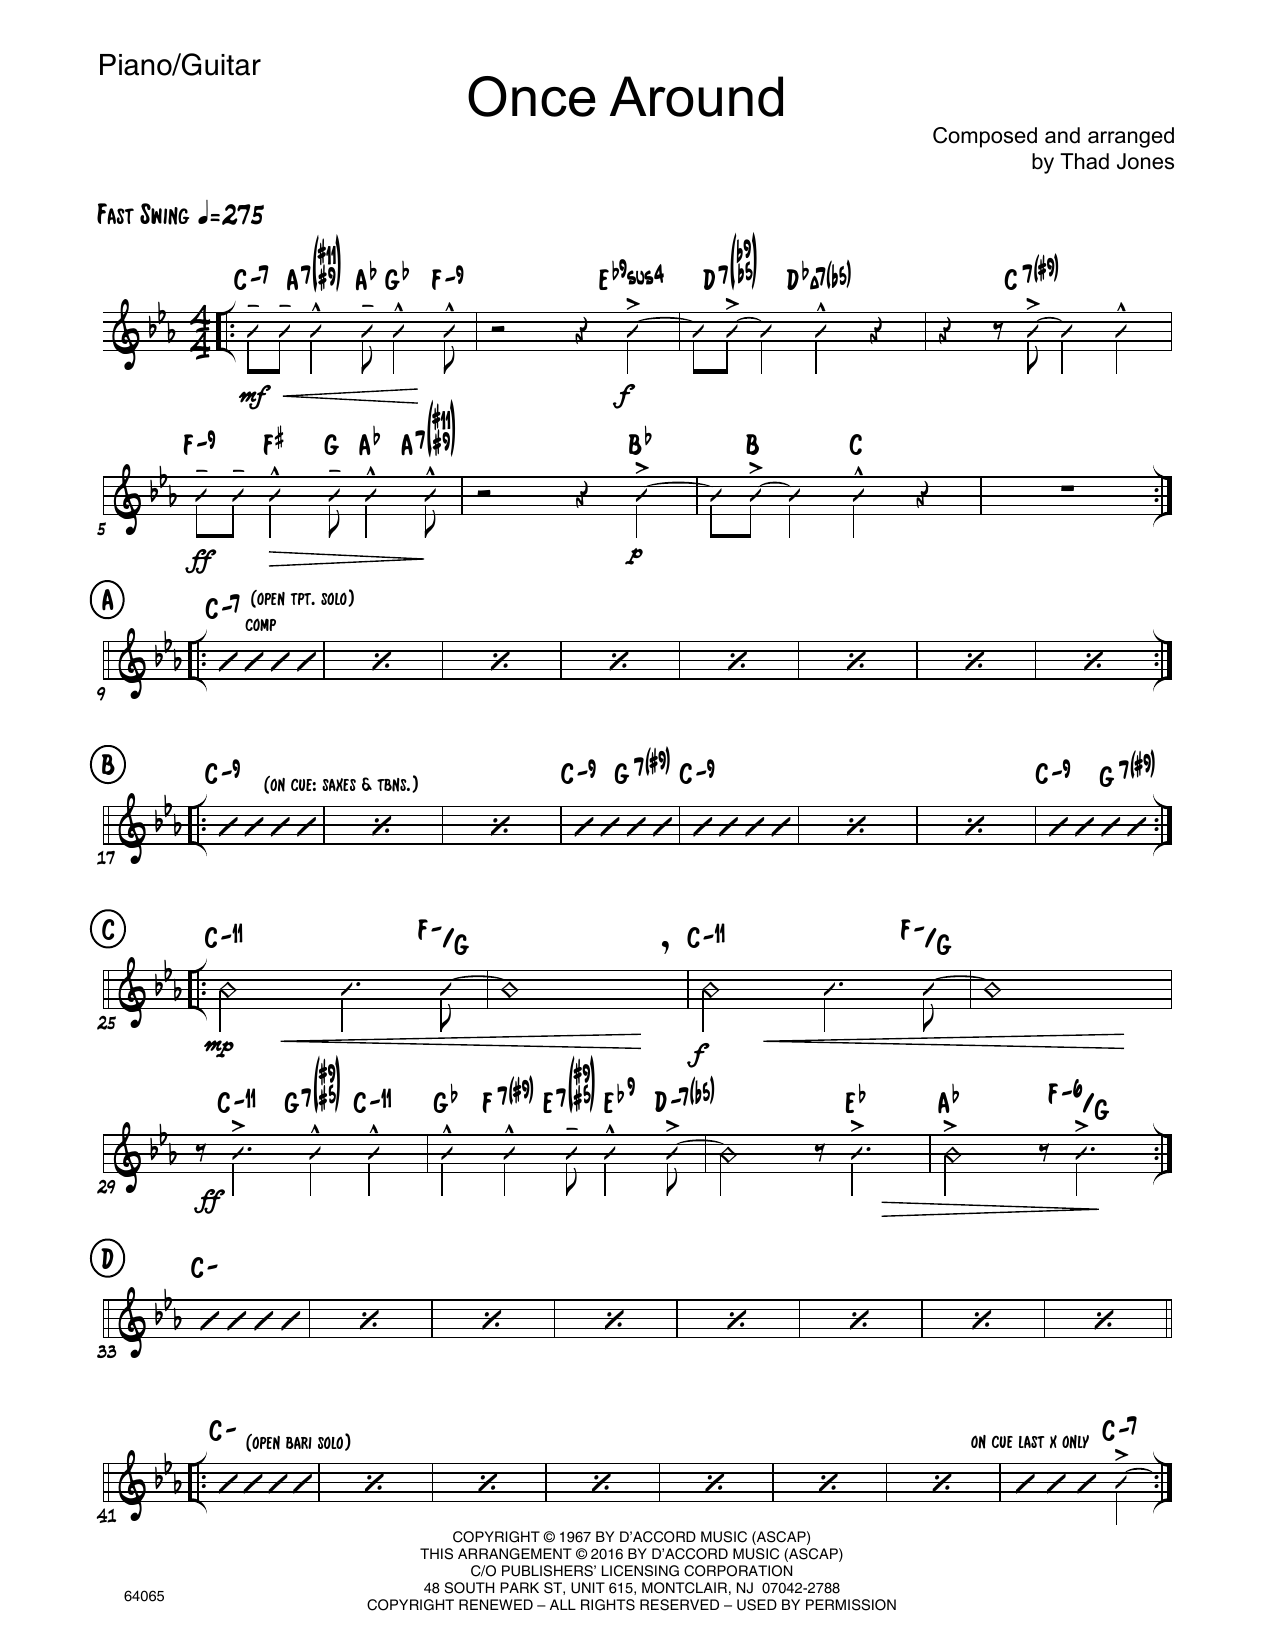 Download Thad Jones Once Around - Piano/Guitar Sheet Music